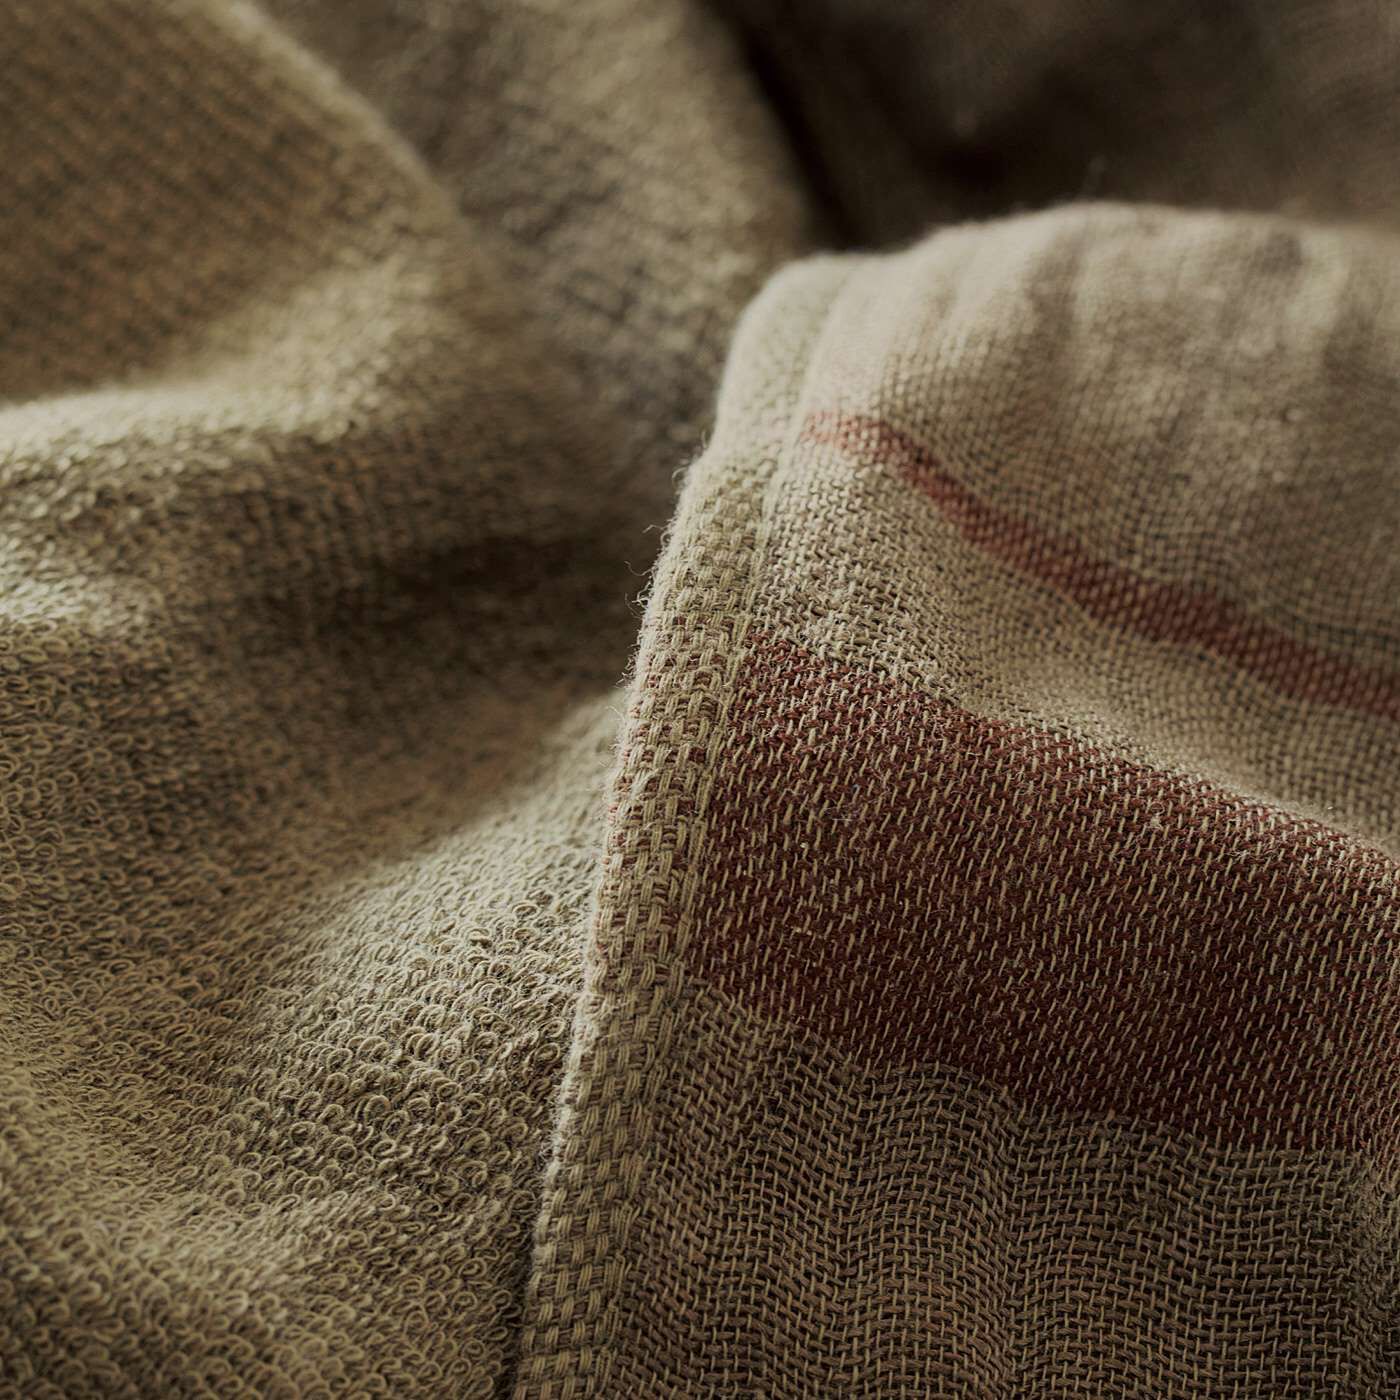 USEDo|古着屋さんで見つけたようなリネンガーゼと綿パイルのバスタオル〈ヴィンテージカラー〉の会|表はリネンガーゼ、裏は綿パイルで肌ざわり抜群。